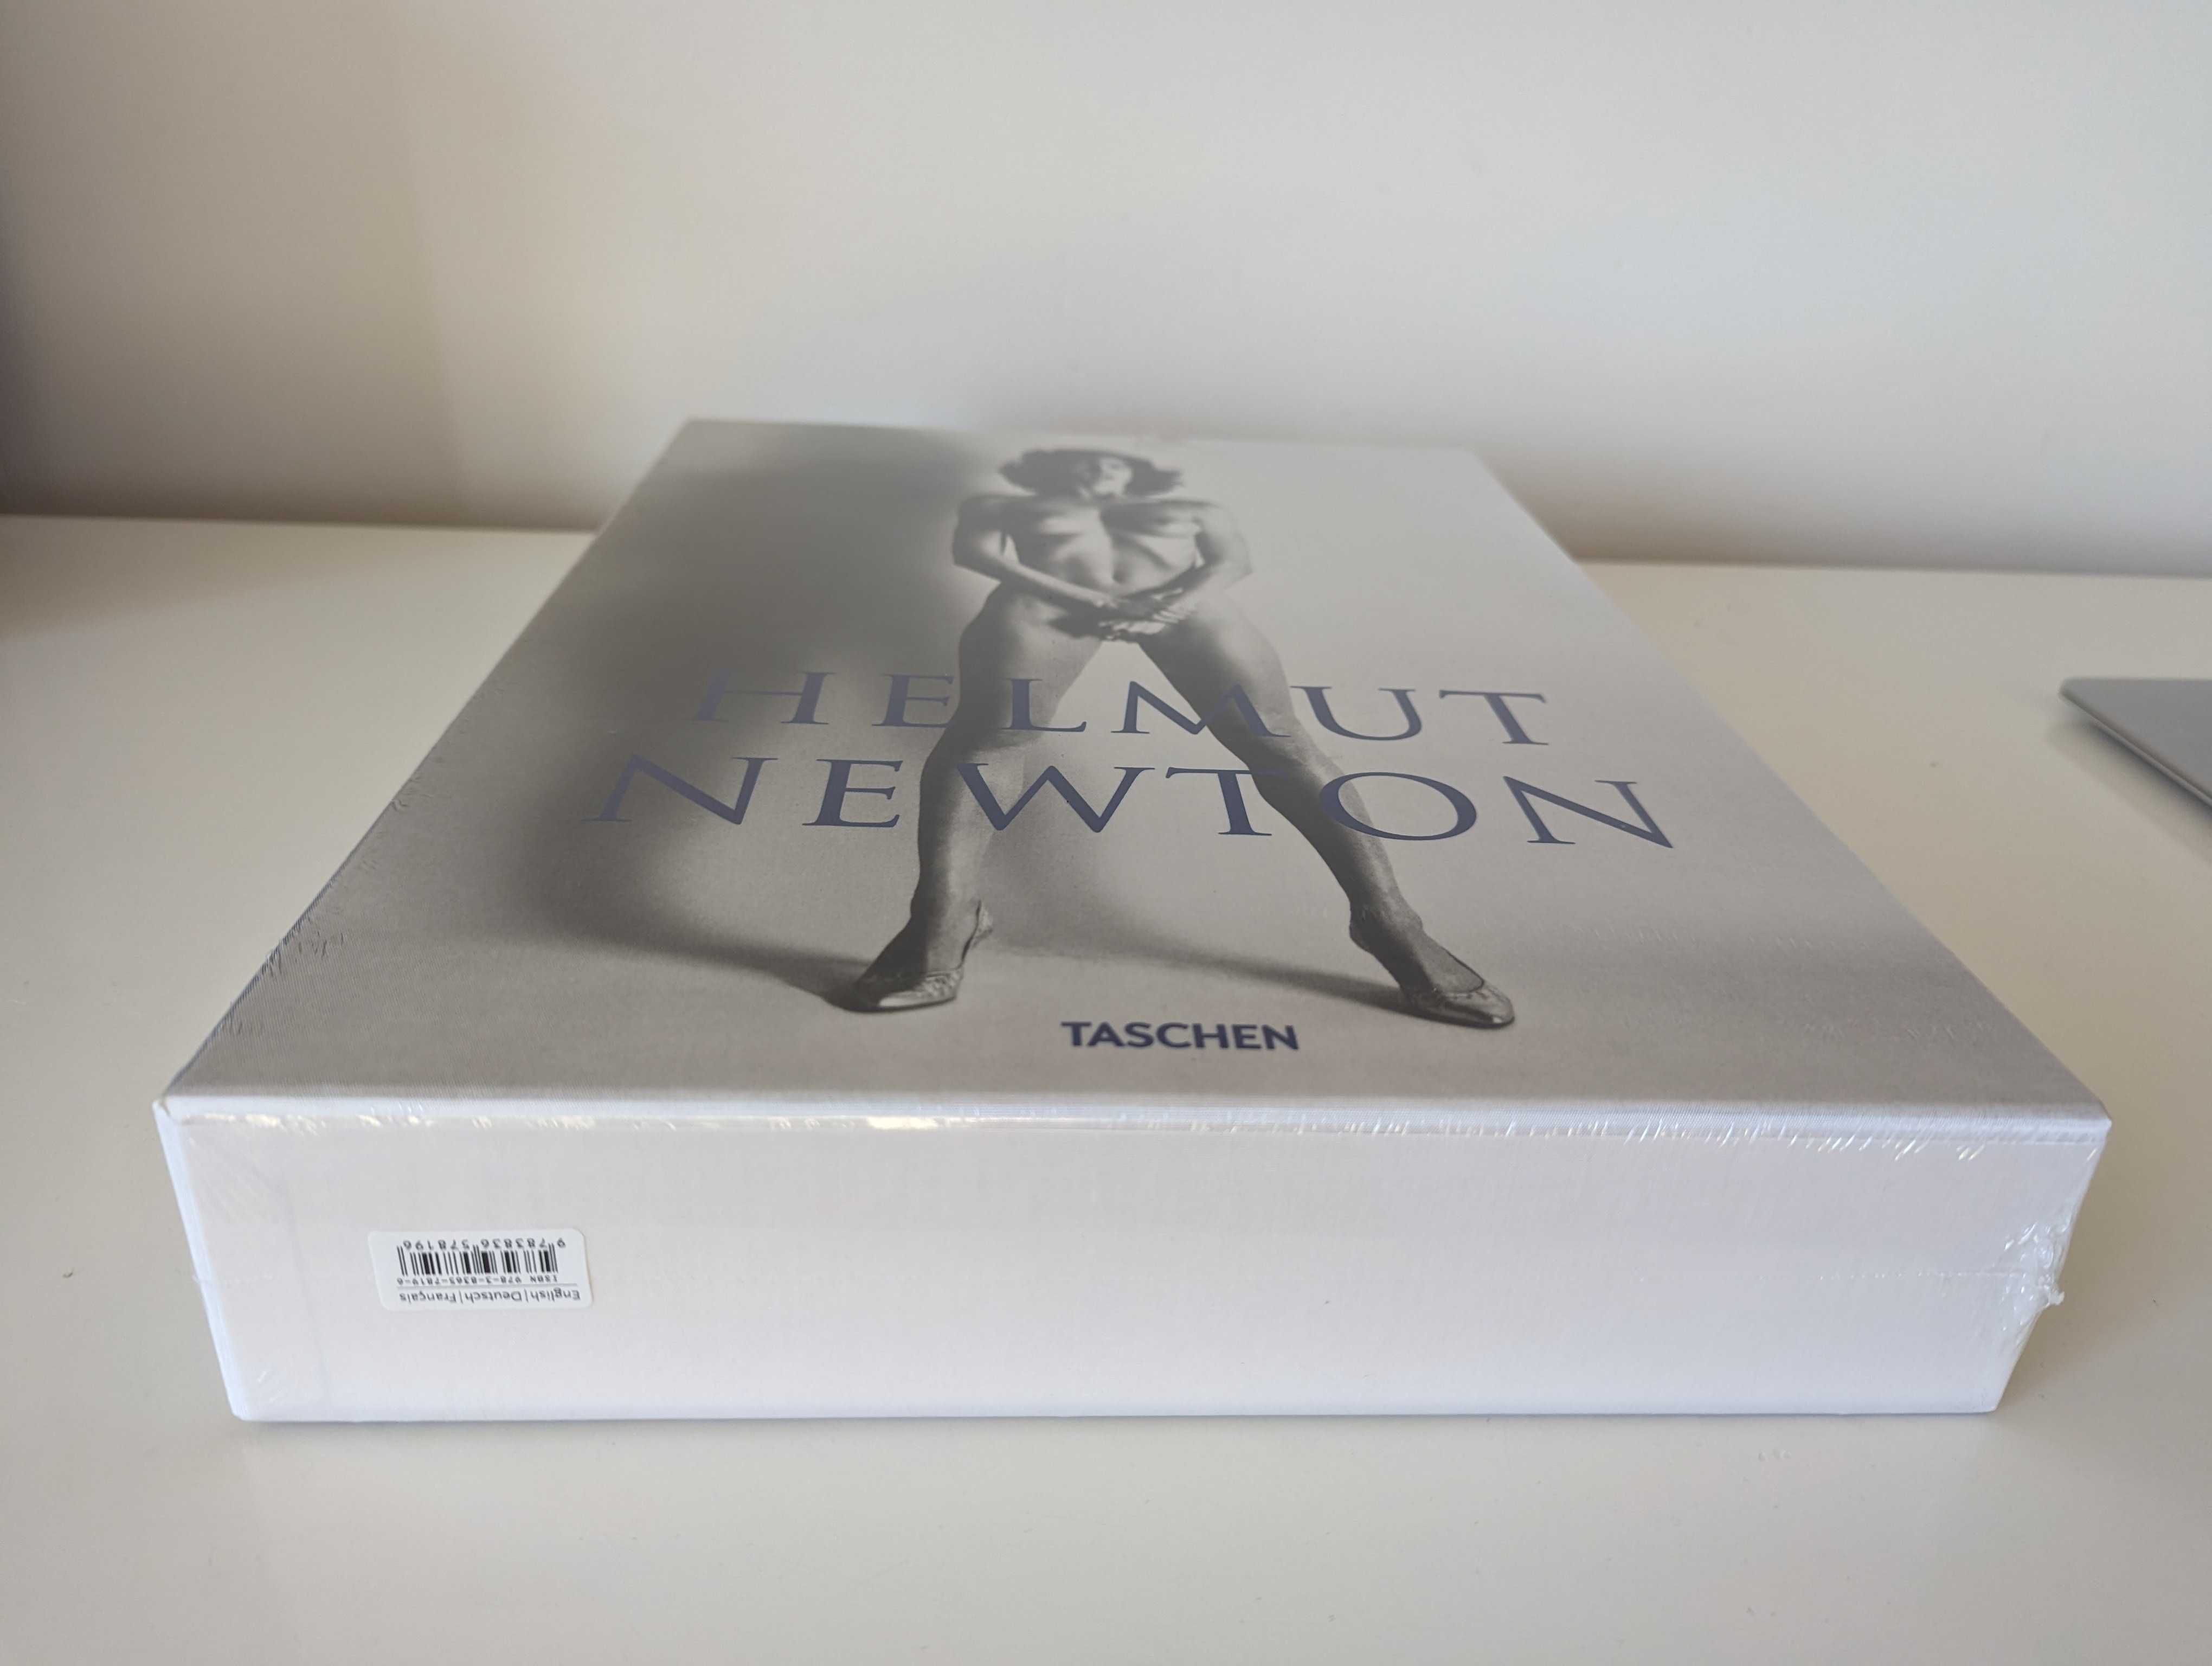 Helmut Newton. SUMO. 20th Anniversary Edition